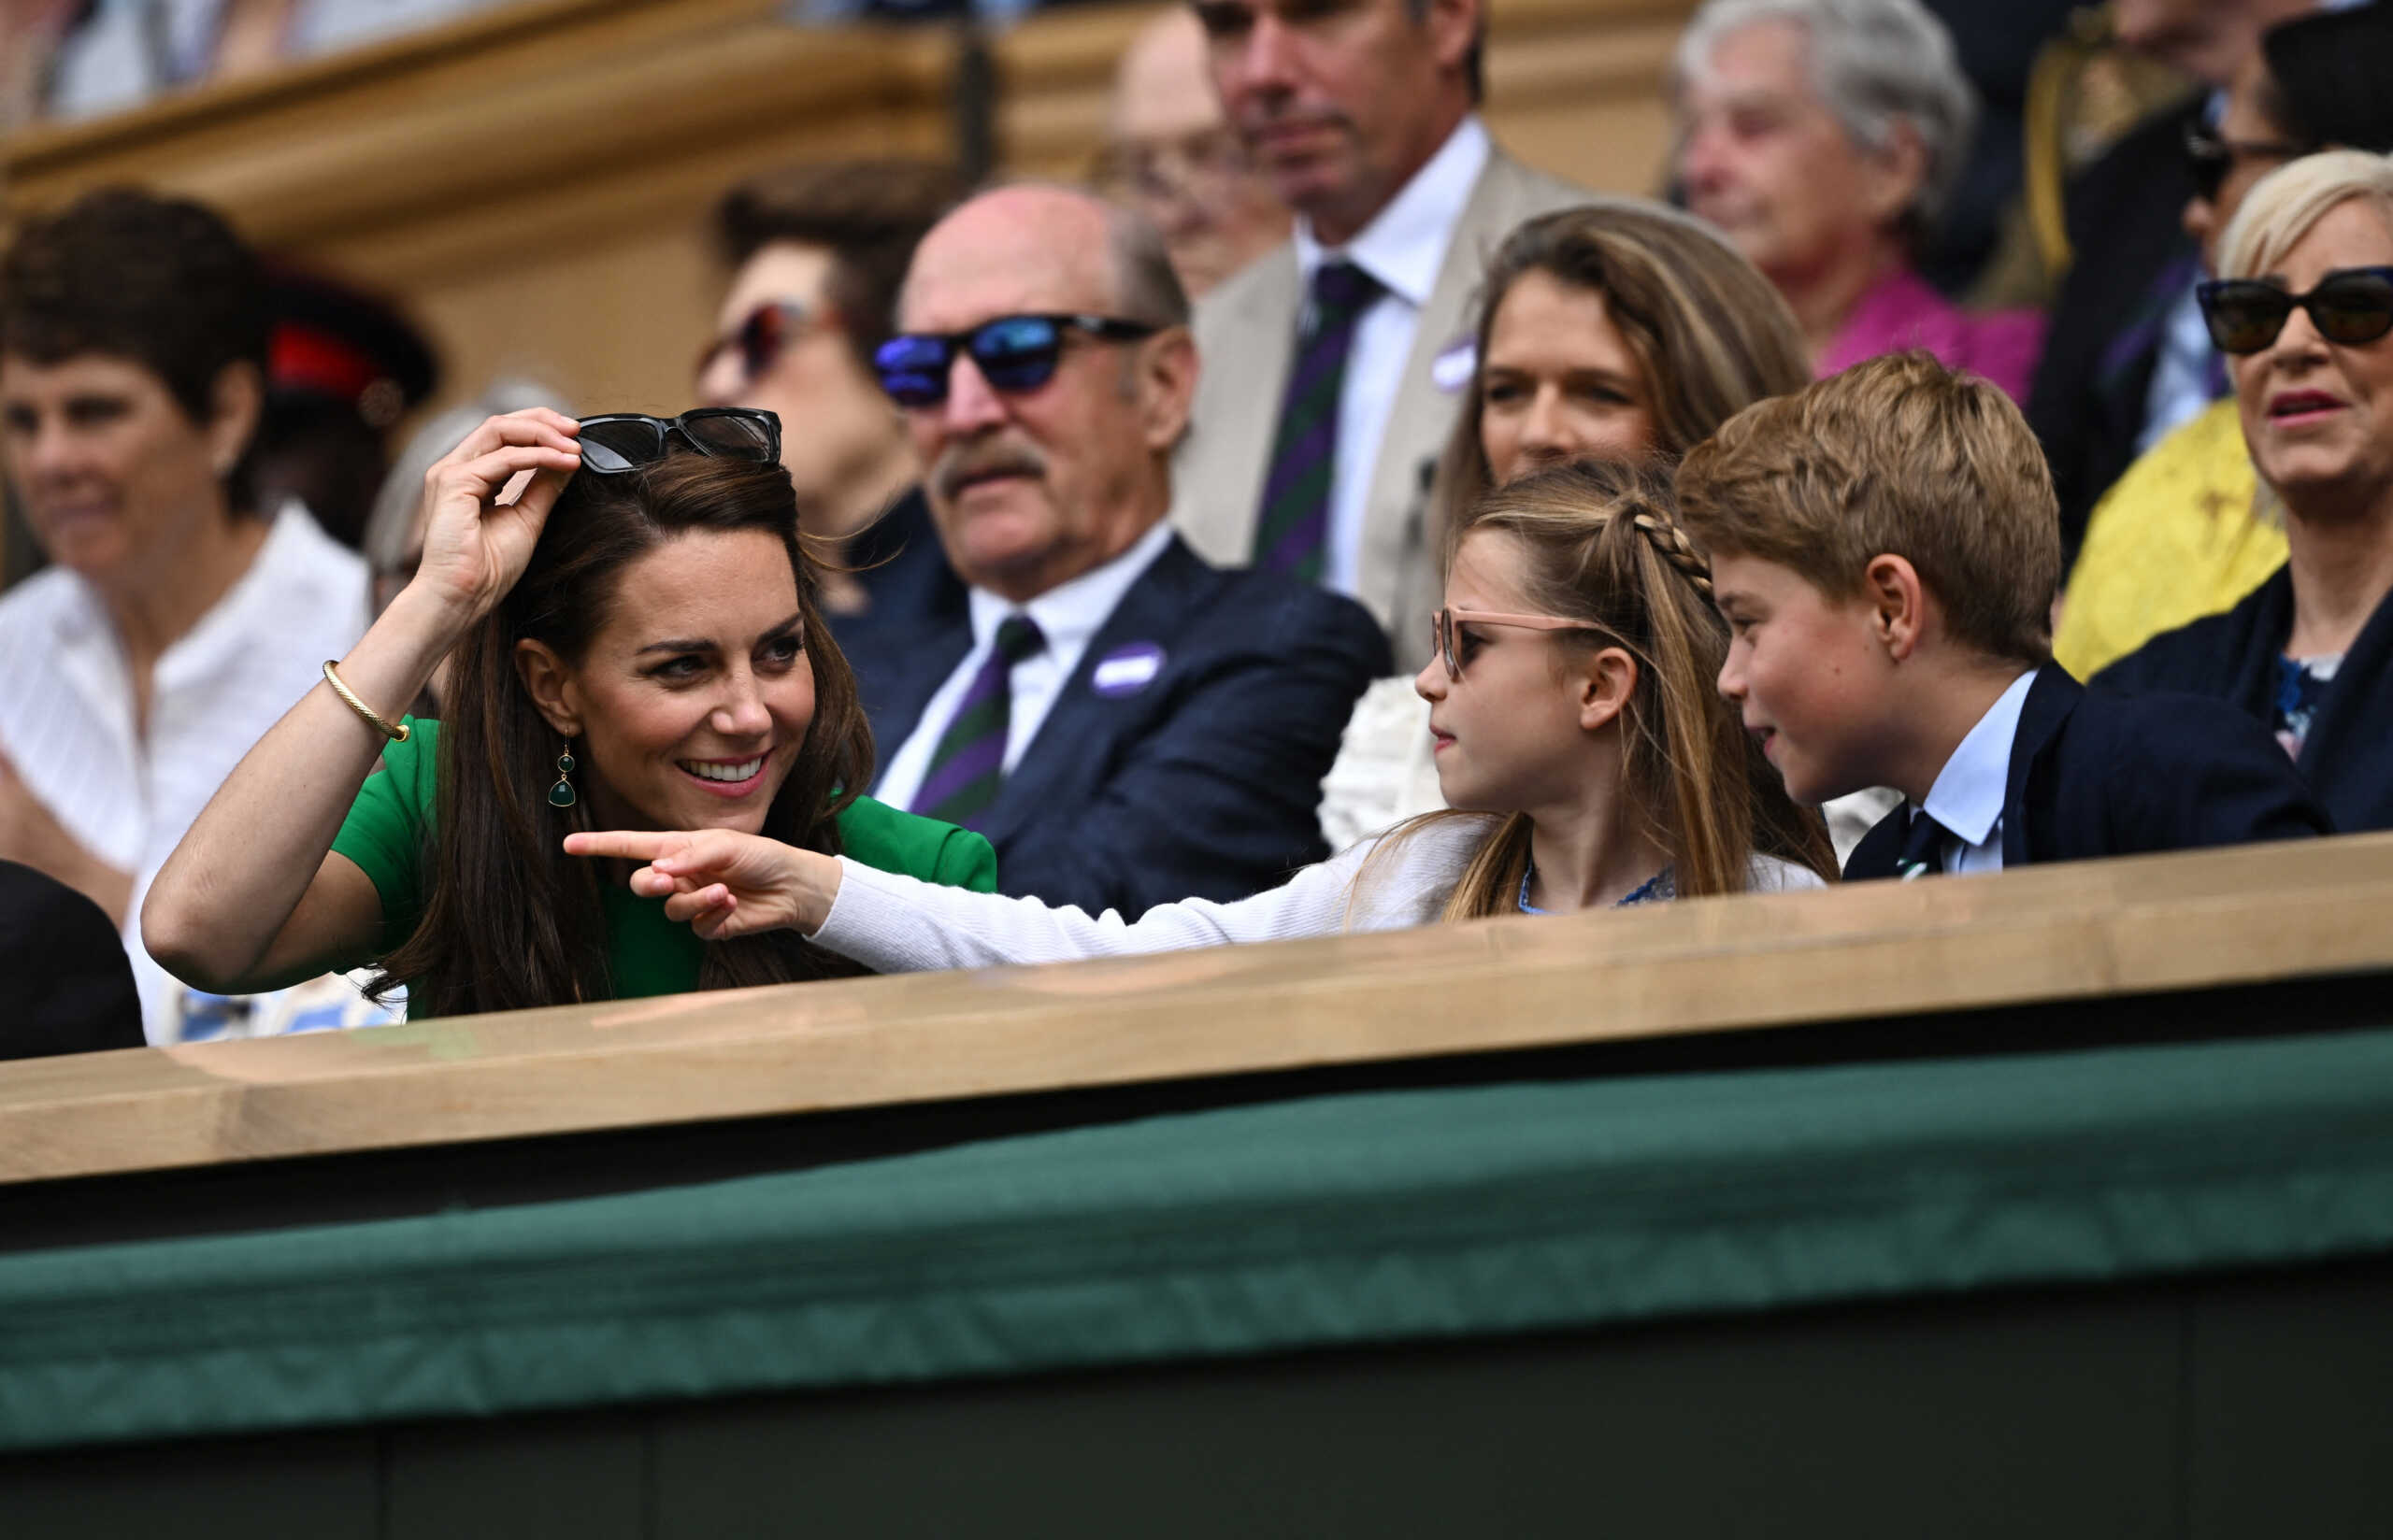 Wimbledon: Πρίγκιπας Γουίλιαμ, Κέιτ Μίντλετον παρακολουθούν τον τελικό – Μαζί τους Τζορτζ και Σάρλοτ